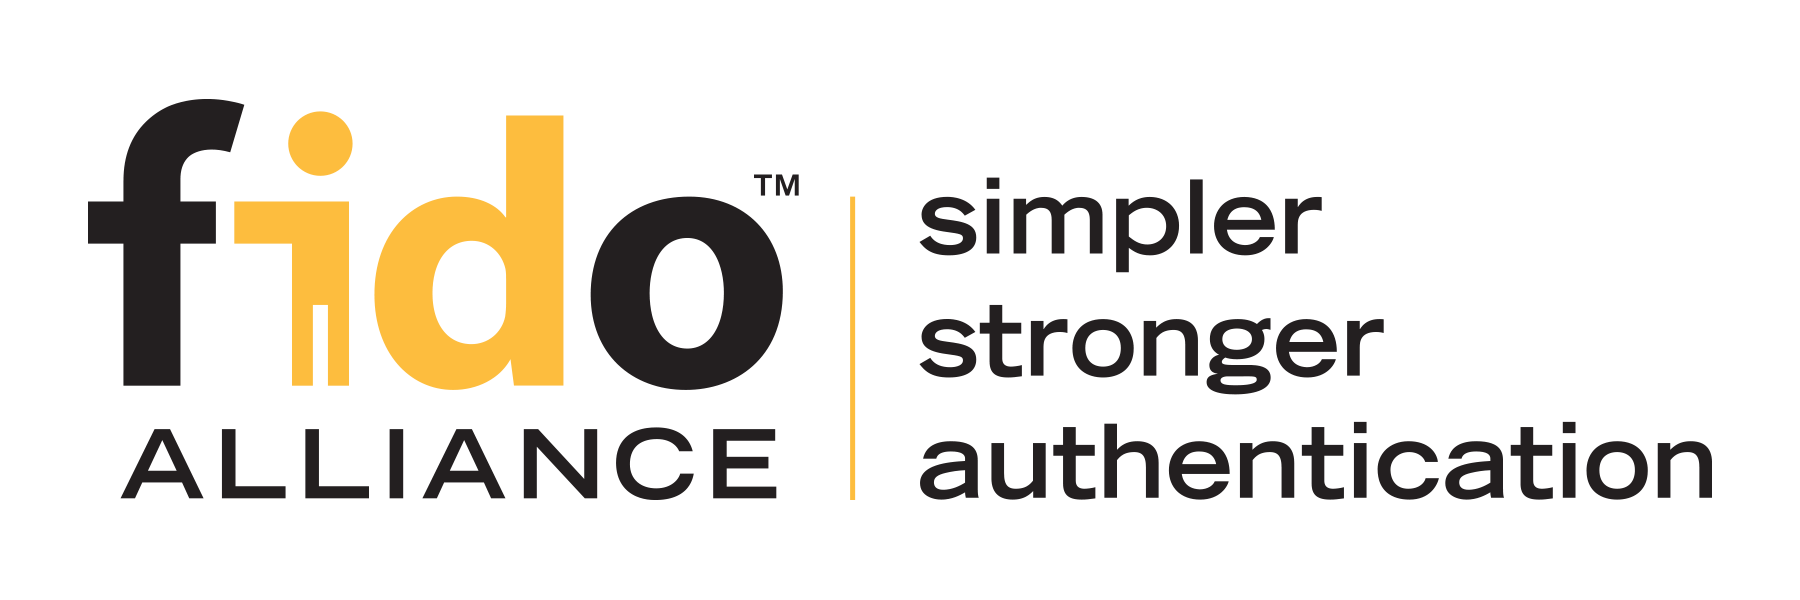 Alliance Logo - Logo Usage & Style Guide - FIDO Alliance